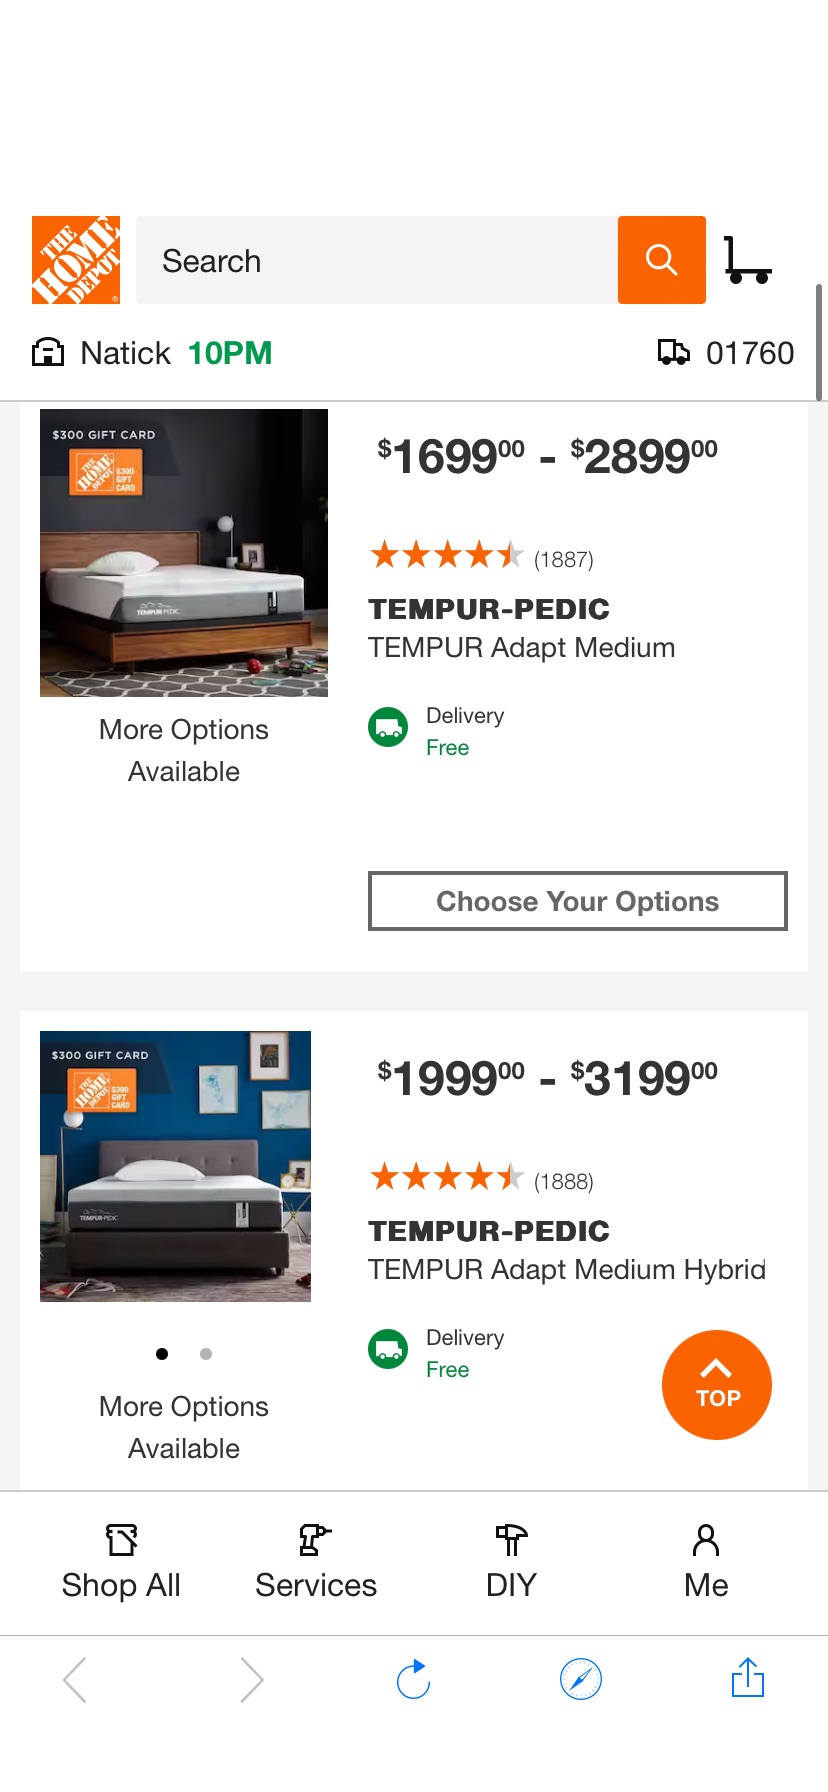 Tempur-Pedic Mattresses at Home Depot
$300 Home Depot GC w/ purchase